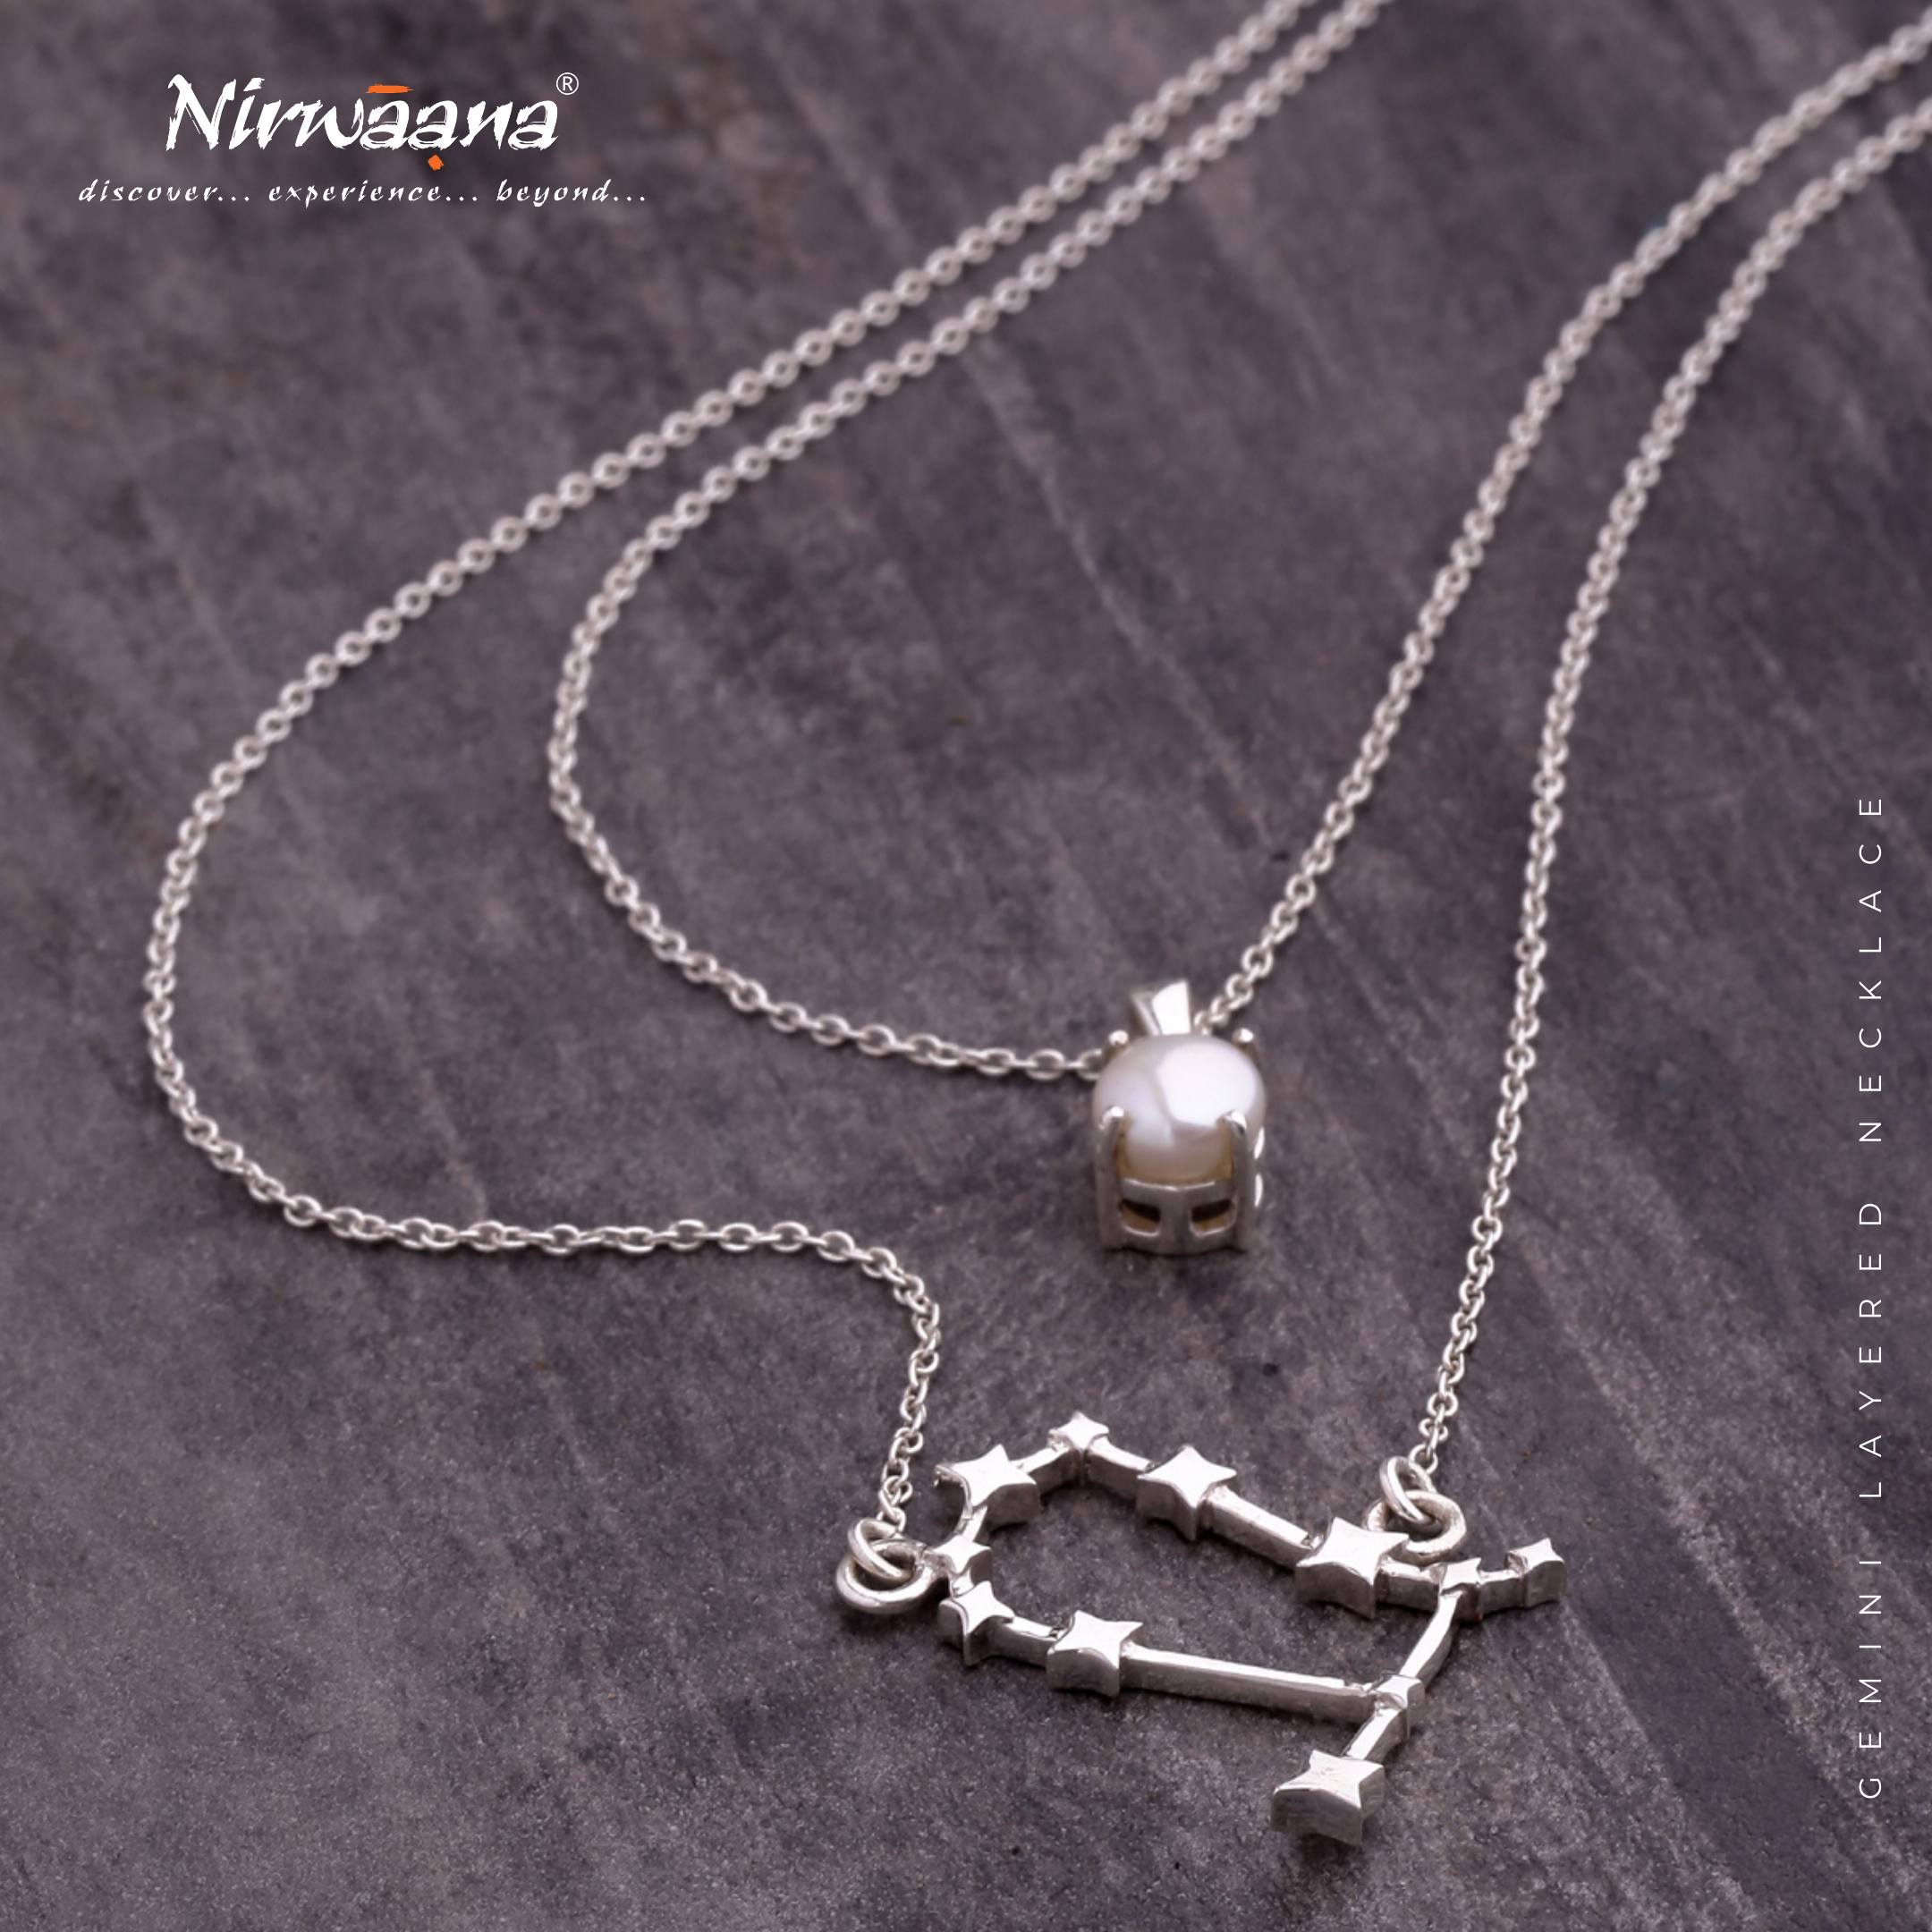 Birthstone jewellery by Nirwaana